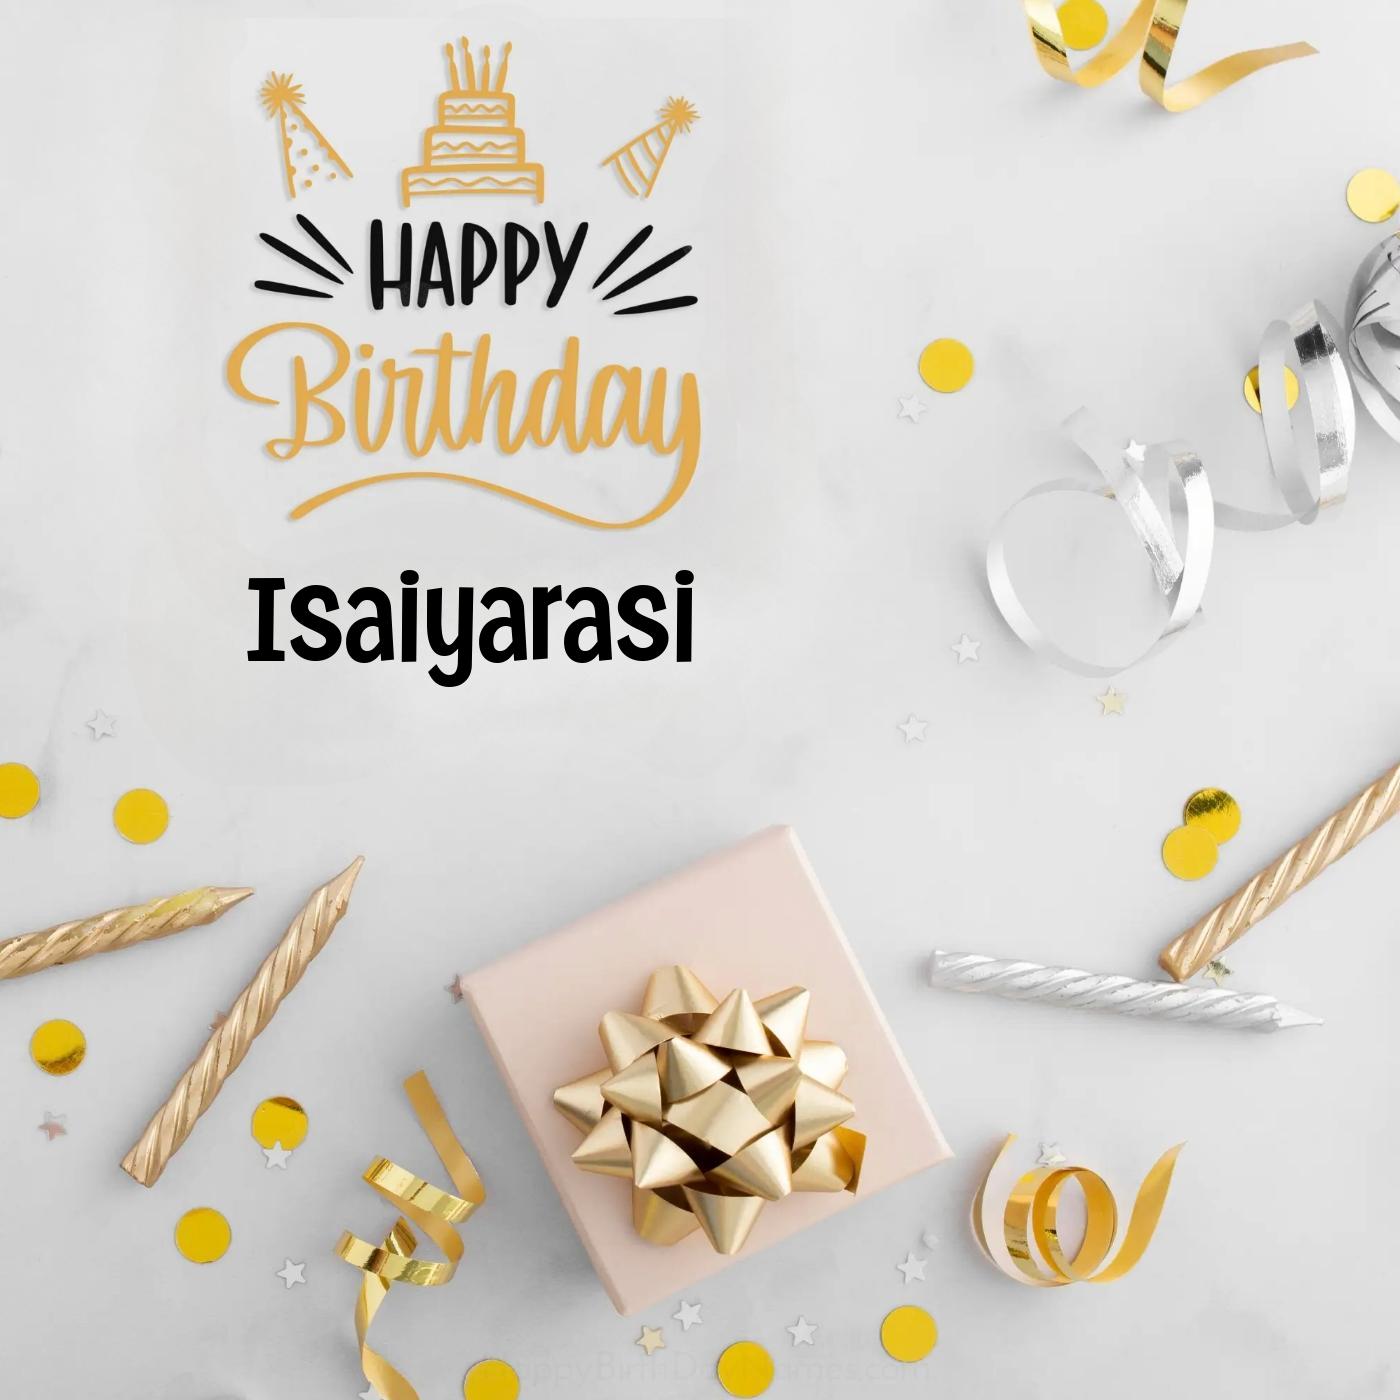 Happy Birthday Isaiyarasi Golden Assortment Card